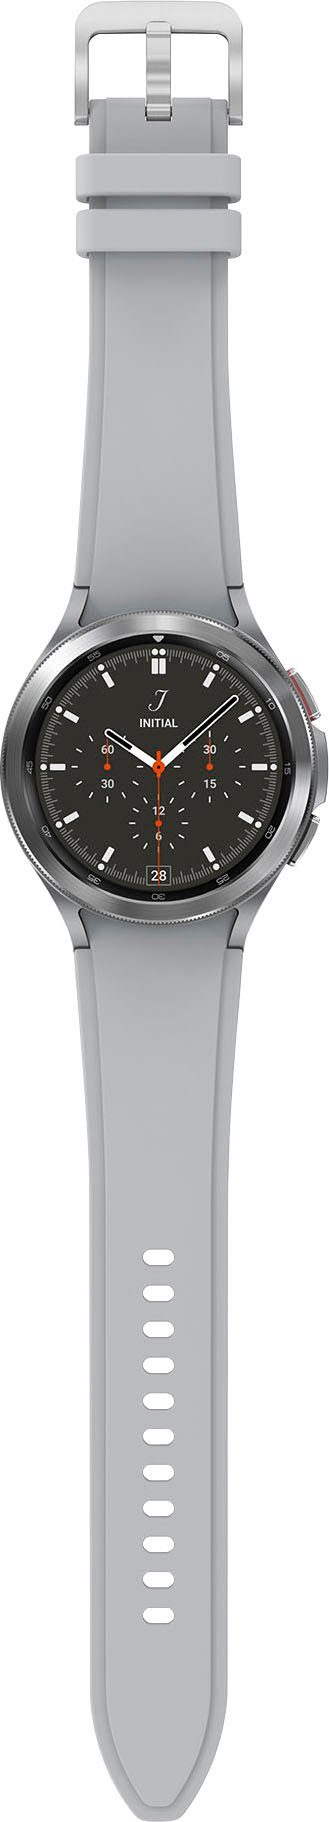 Samsung Galaxy classic Google), | OS 46mm Fitness cm/1,4 Zoll, by LTE 4 Uhr, Gesundheitsfunktionen (3,46 silberfarben silberfarben Watch Wear Tracker, Smartwatch Fitness